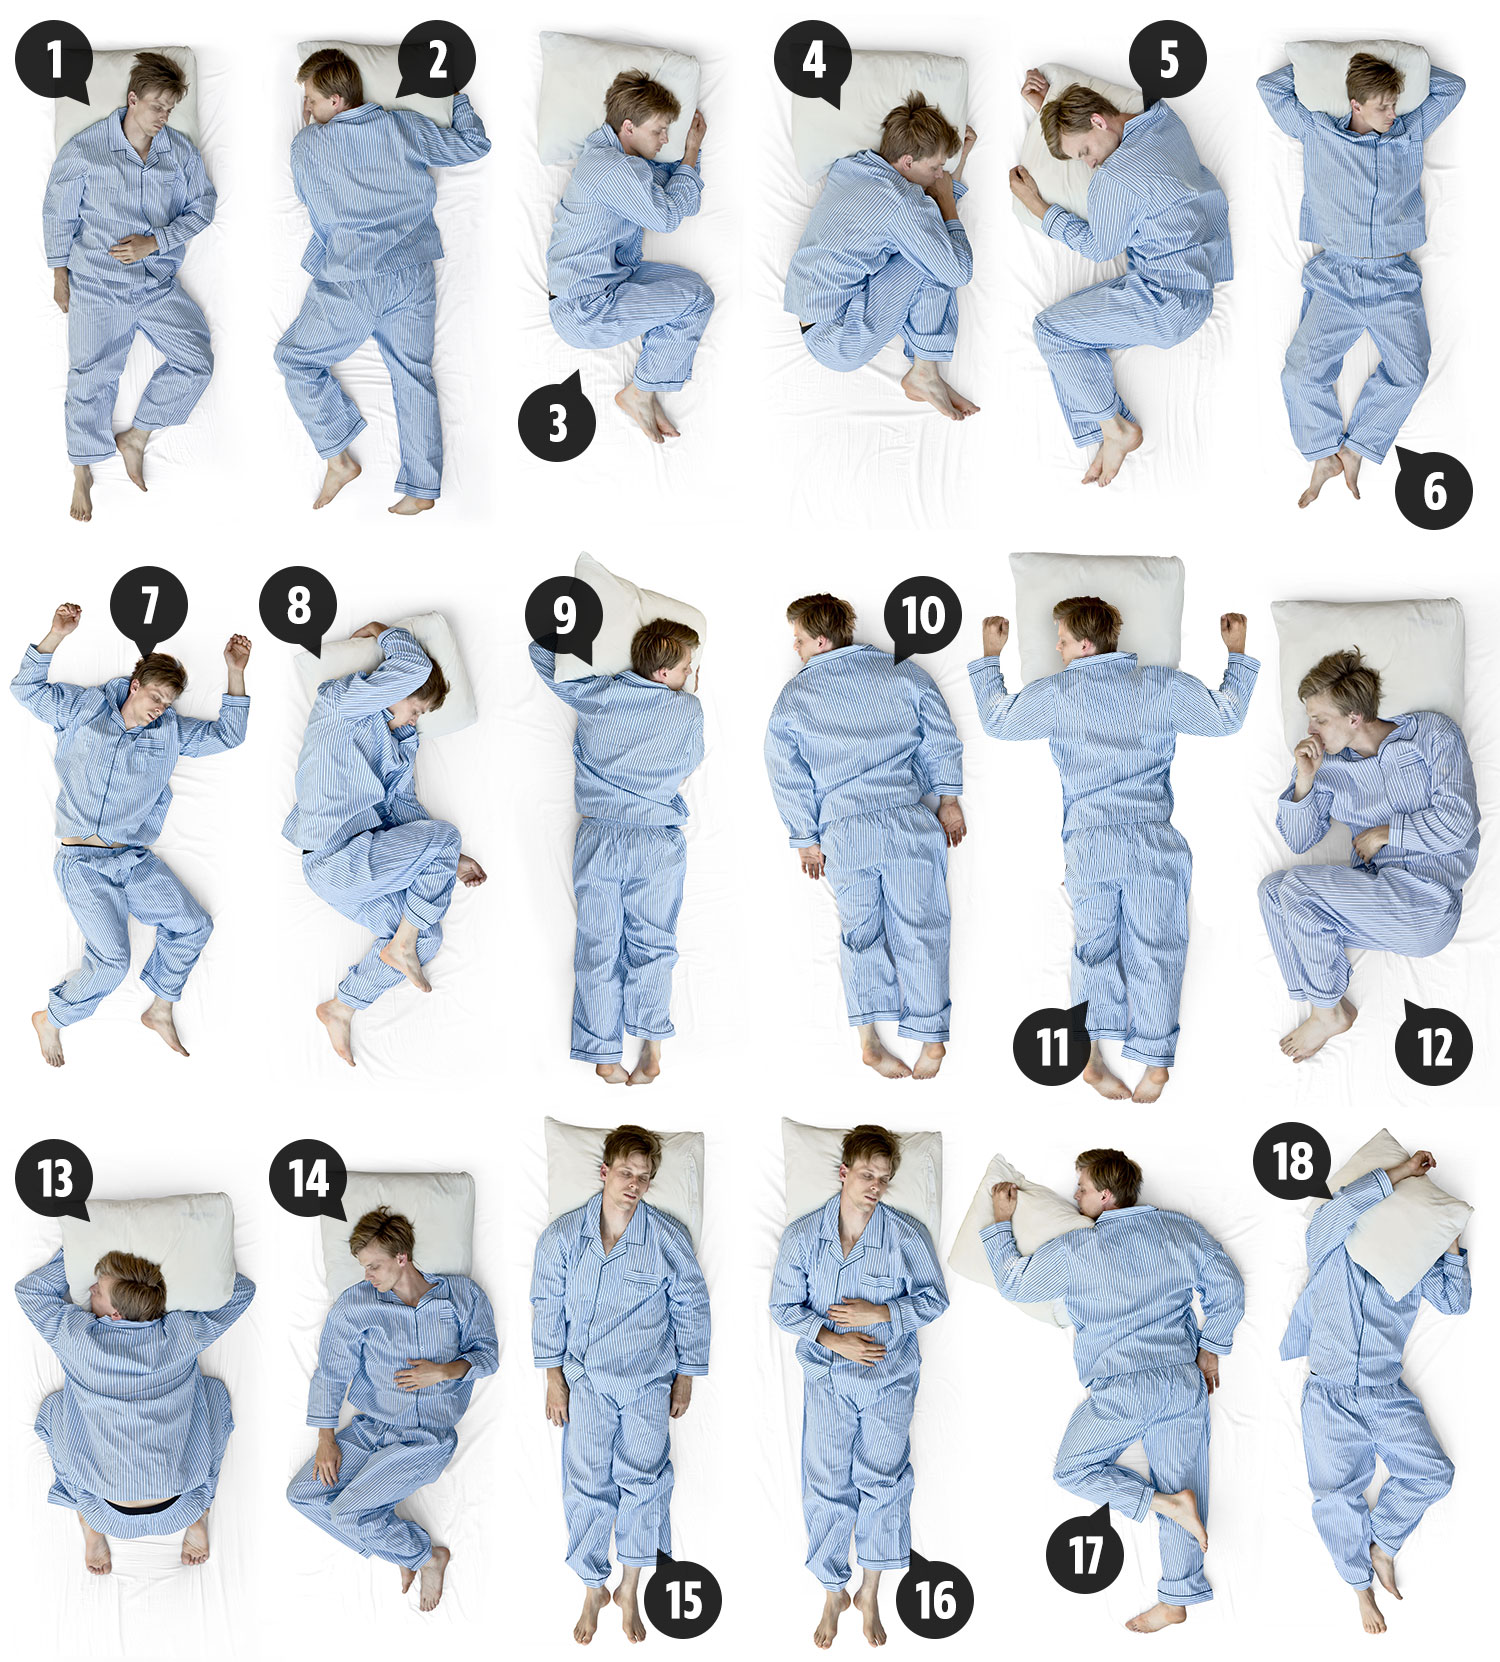 tp-graphic-sleeping-positions-1.jpg